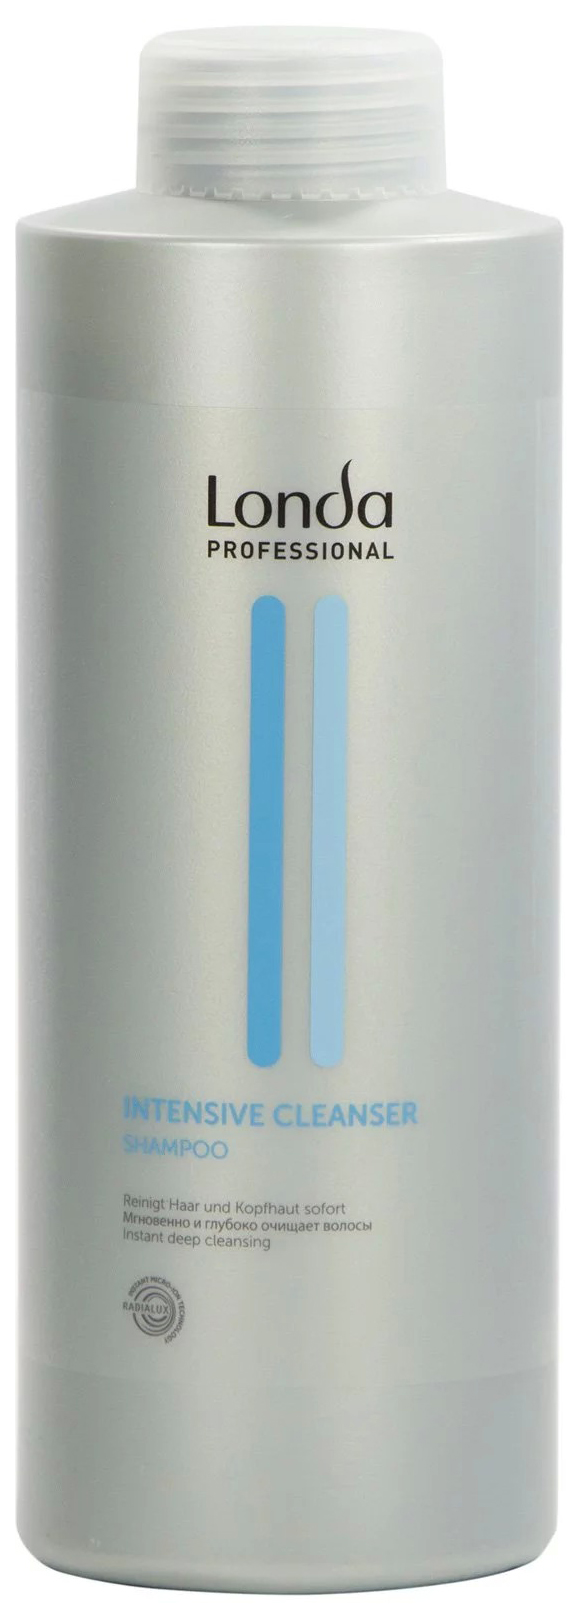 Шампунь Londa Professional Intensive Cleanser Shampoo 1000 мл шампунь пилинг перед терапией nirvel professional peeling capillary shampoo 250 мл